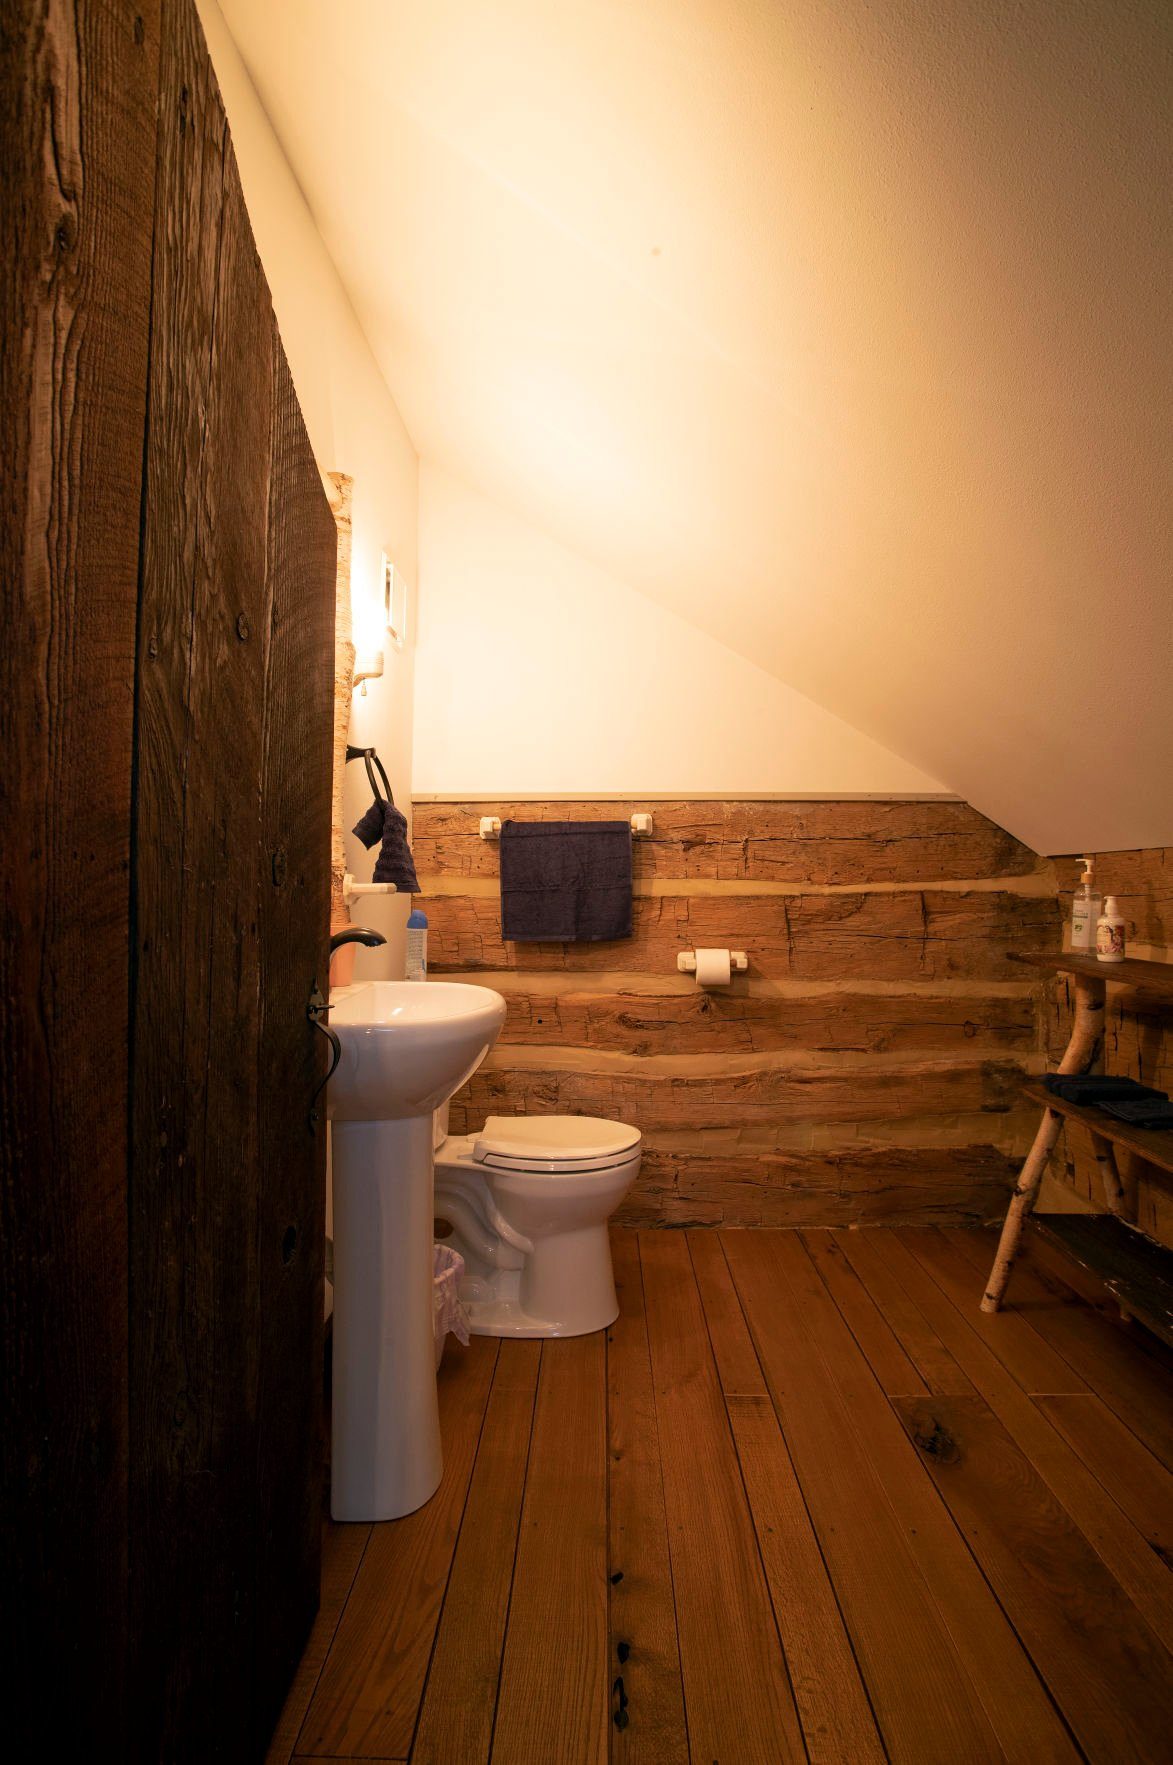 Second-floor bathroom of the Woodenhead cabin in St. Donatus, Iowa, on Friday, Dec. 10, 2021.    PHOTO CREDIT: Stephen Gassman